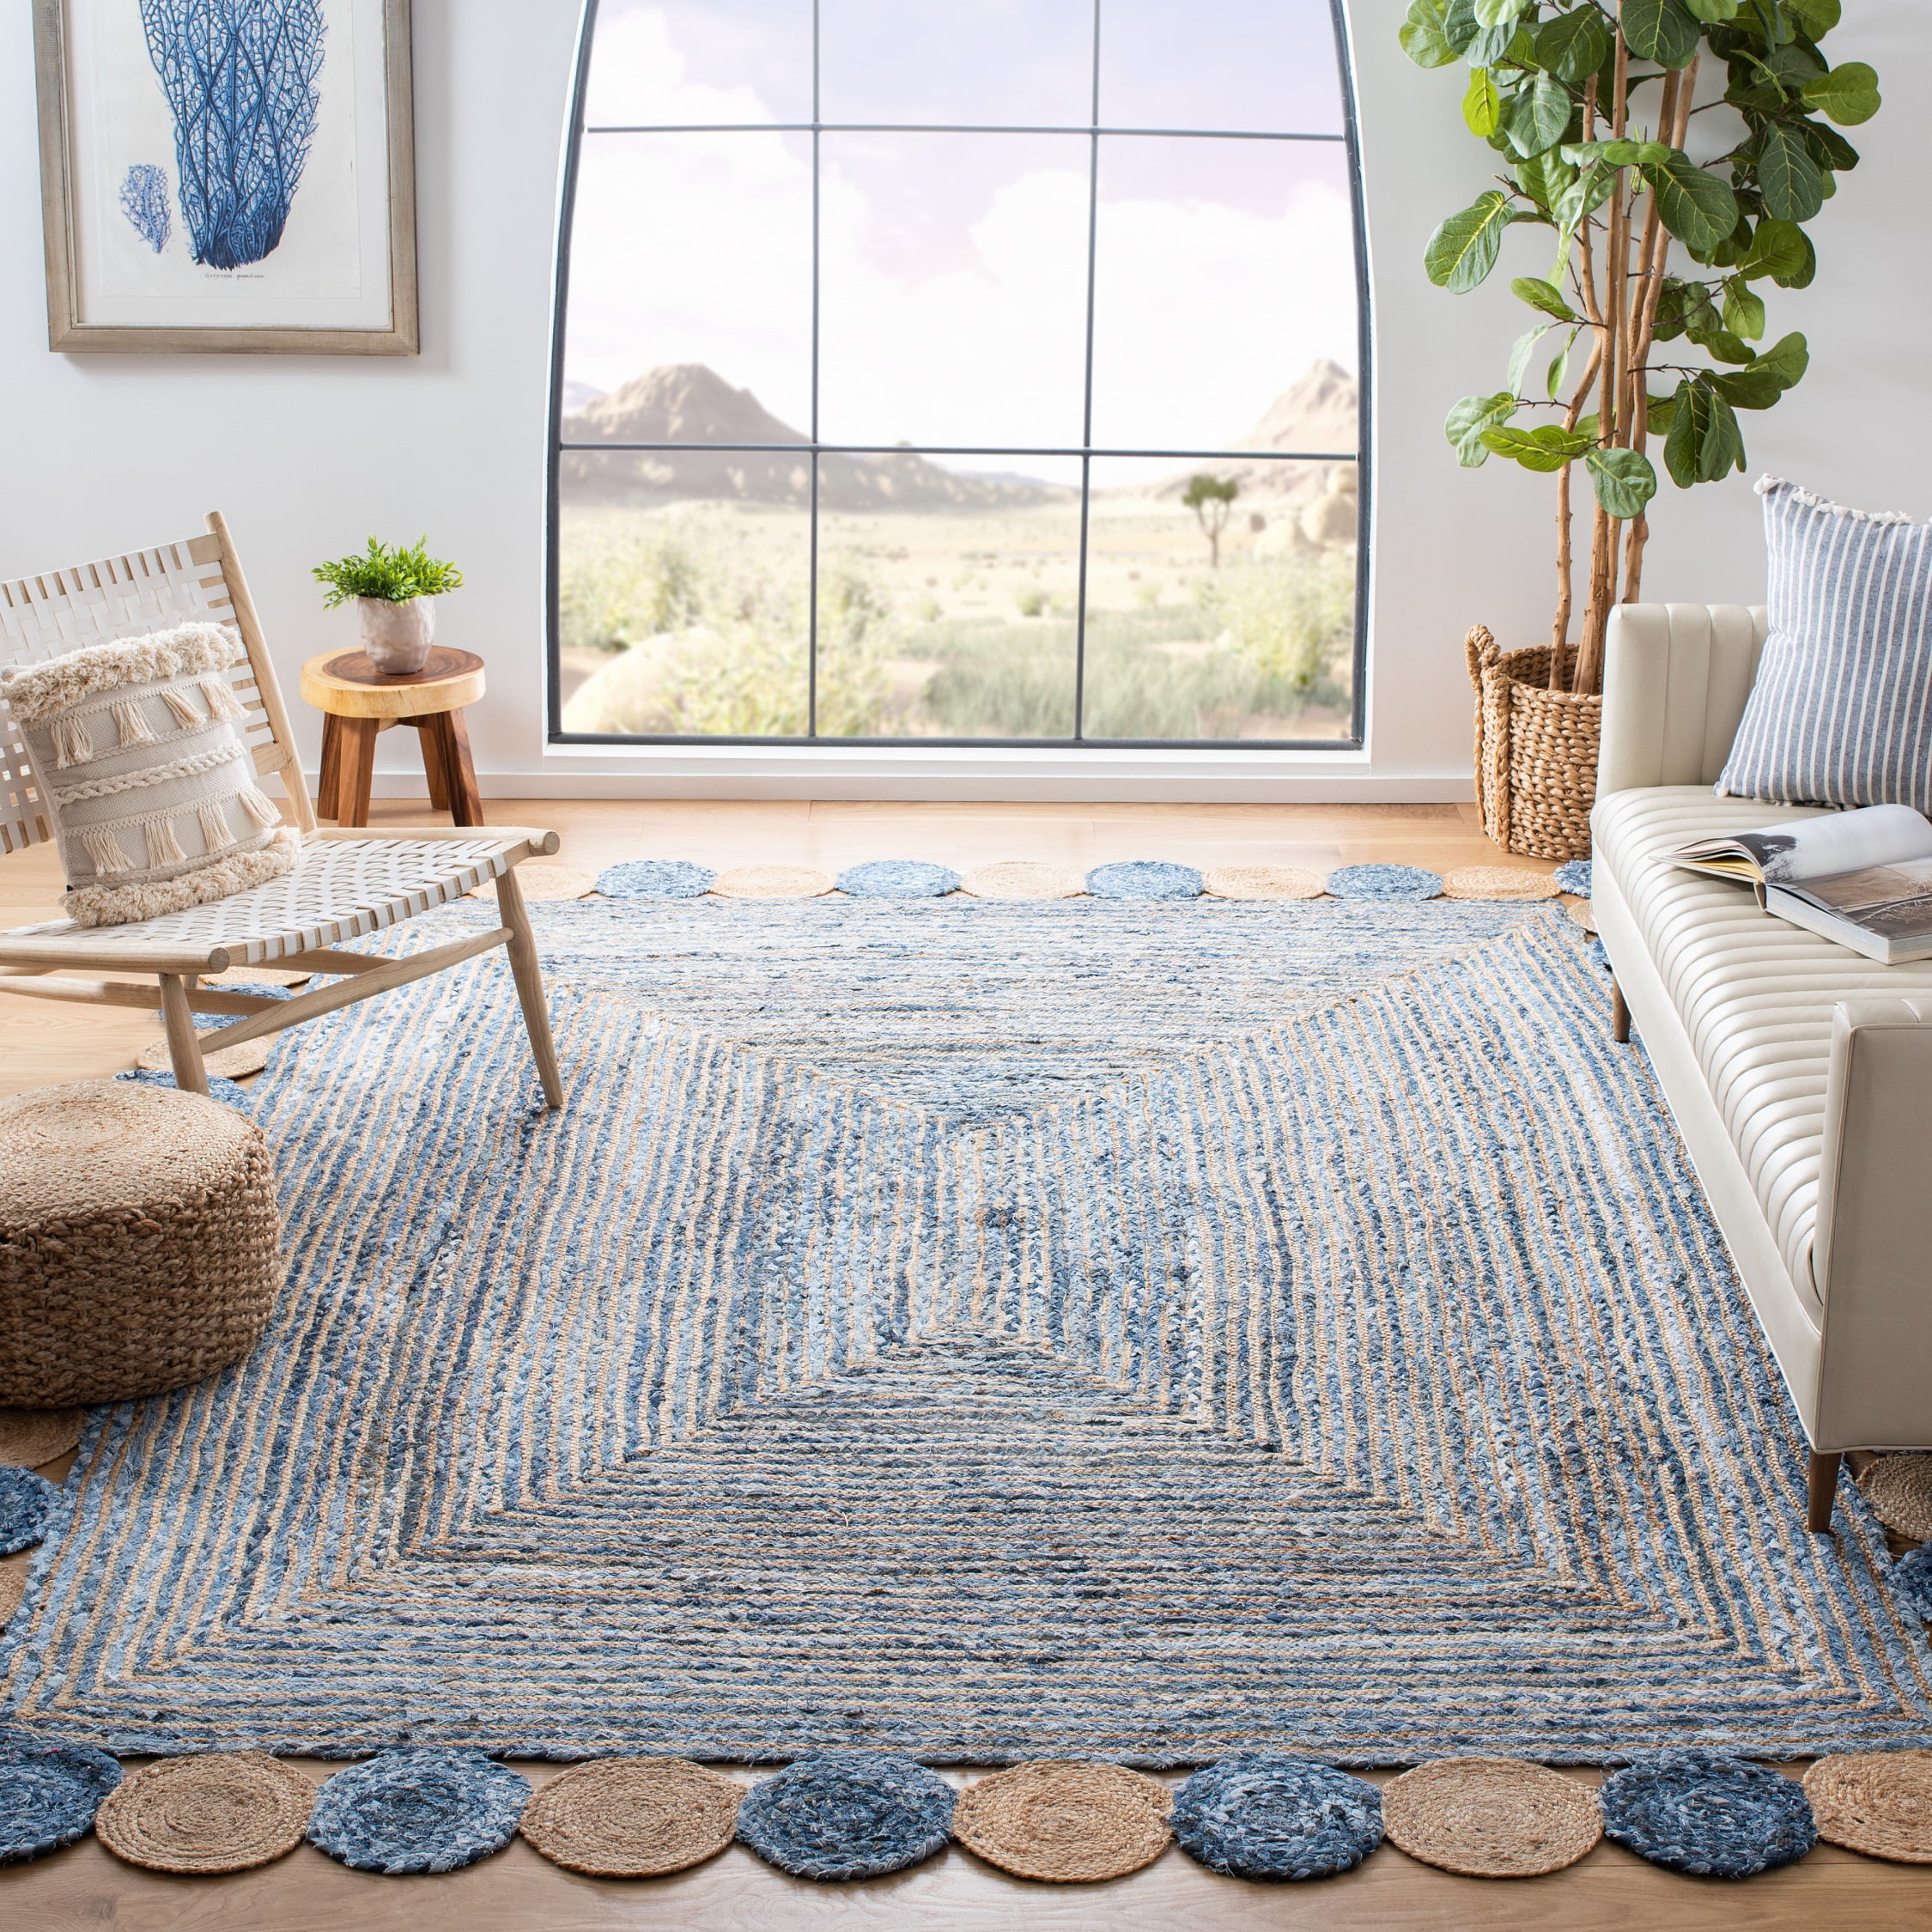 Buy rugs online @The Rug Republic - hand tufted wool denim area rug